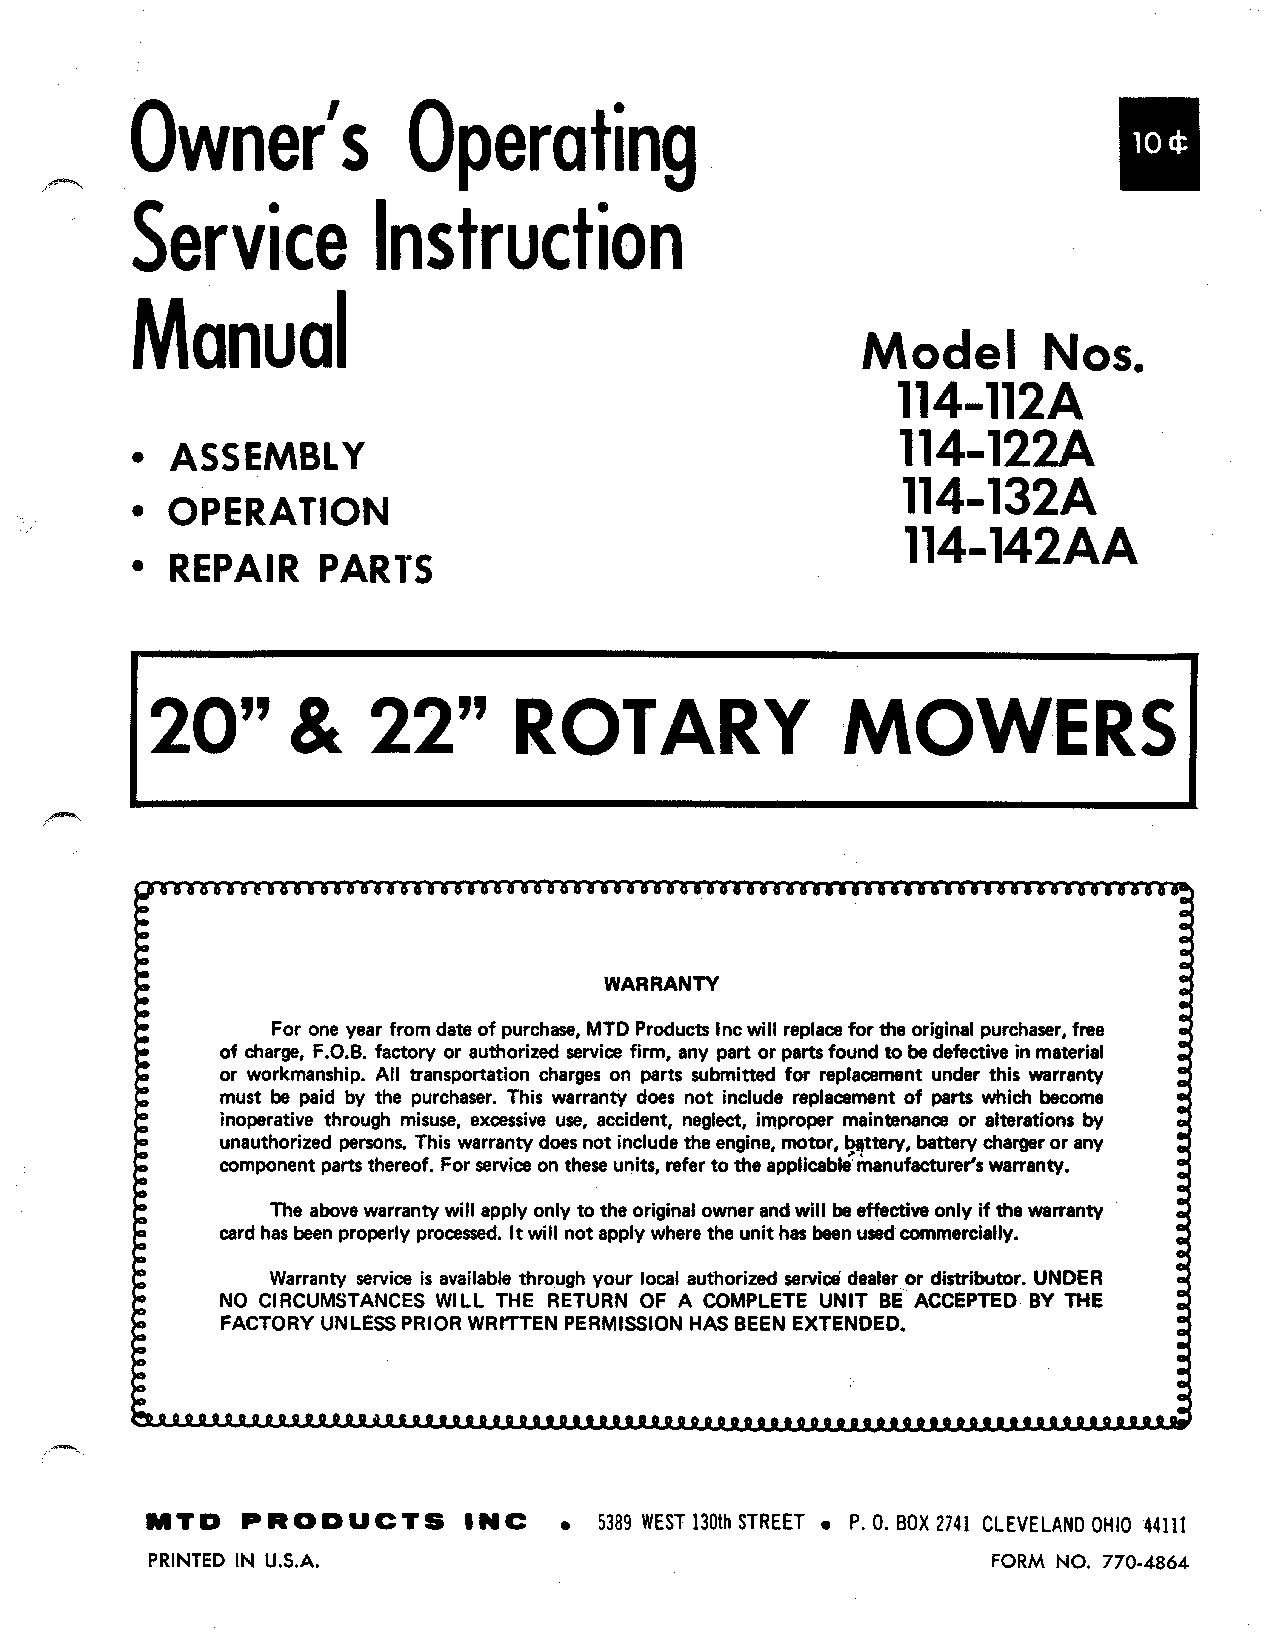 MTD 114-142AA, 114-132A, 114-122A, 114-112A User Manual